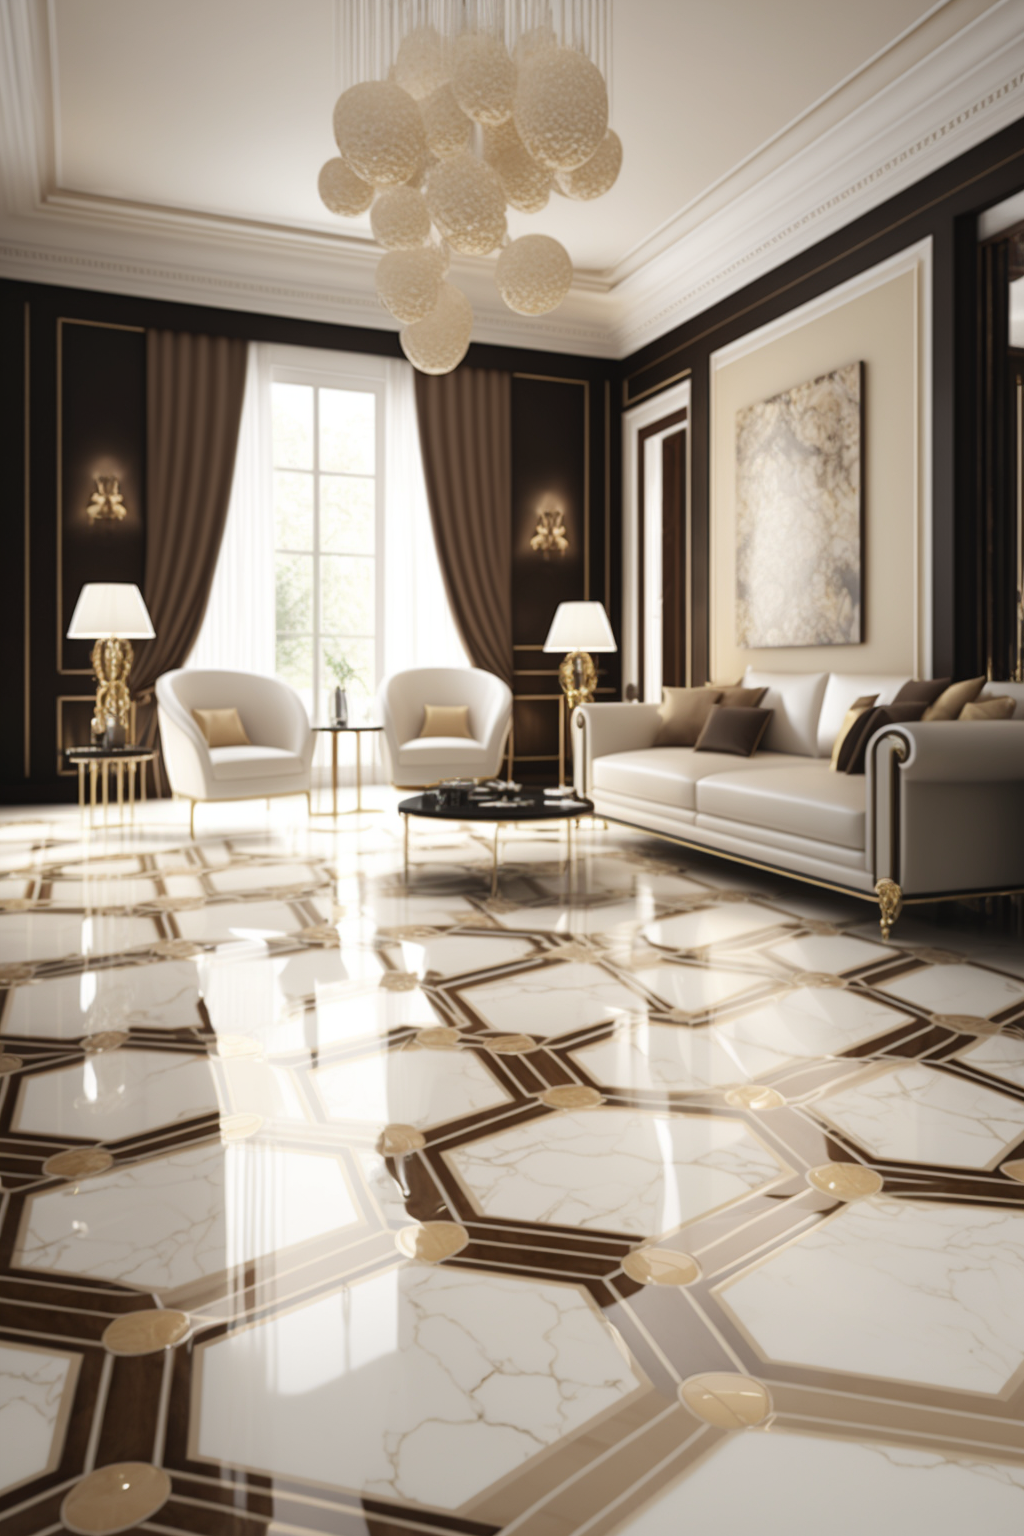 Ariel_Levi_Luxury_ceramic_floor_tiles_Living_room_856819ed-bbd6-4340-be1d-6fd7363faedd